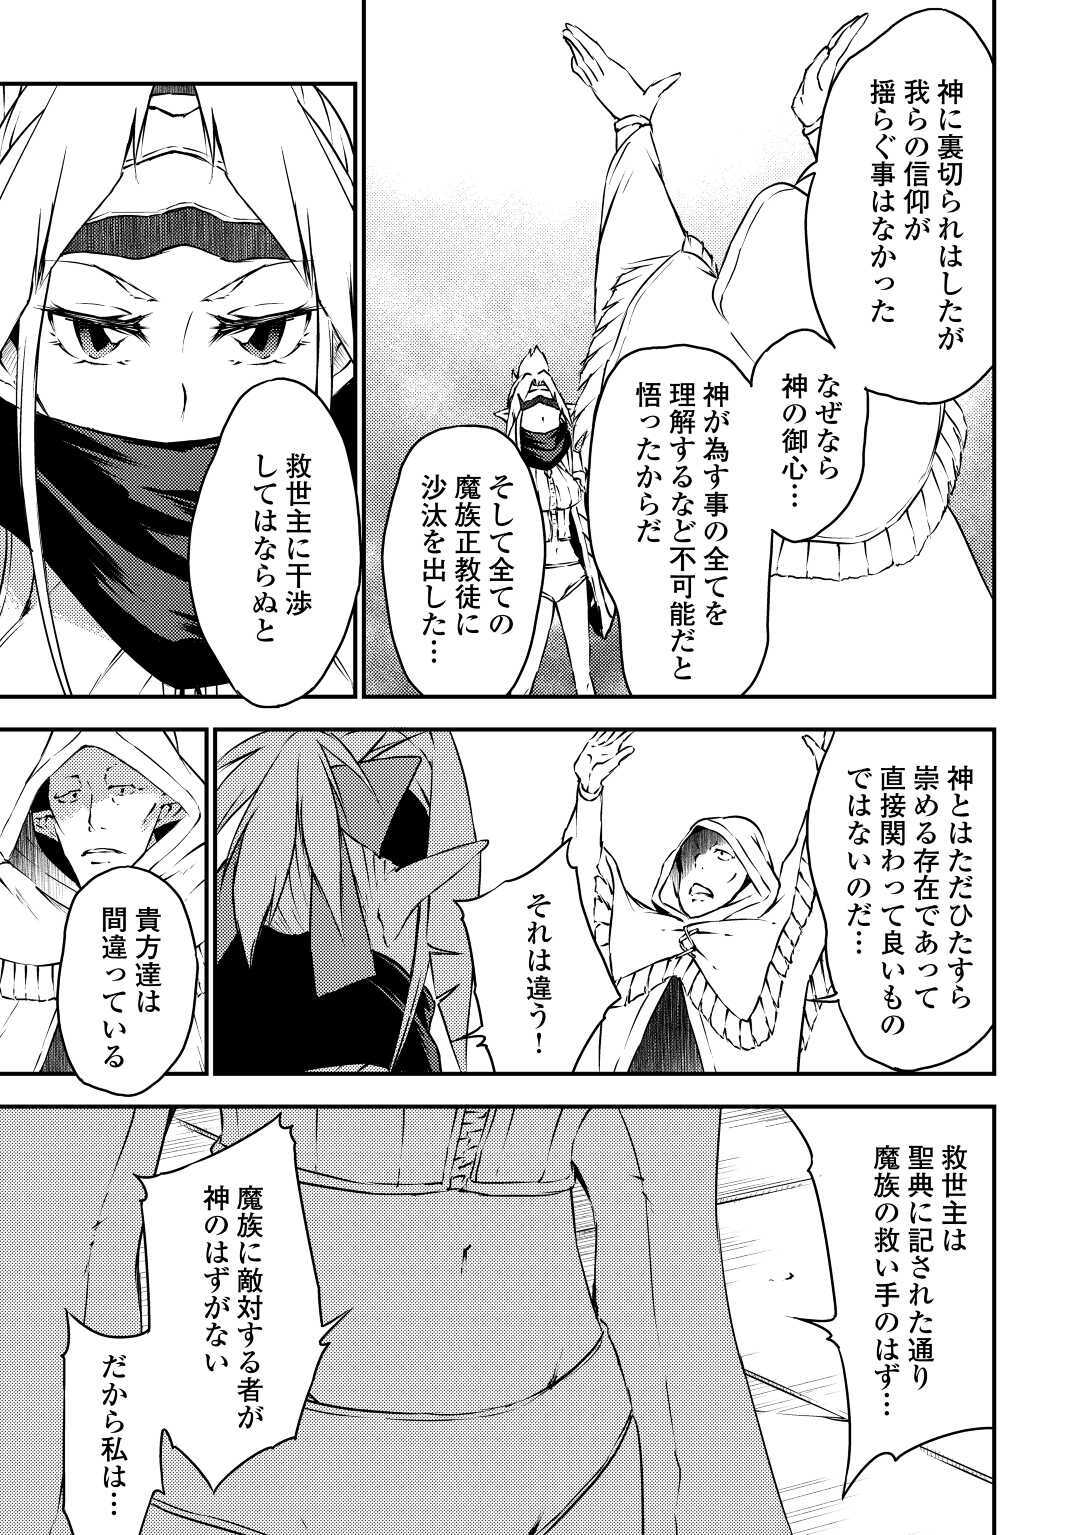 Yuusha no Mago to Maou no Musume - Chapter 28 - Page 3